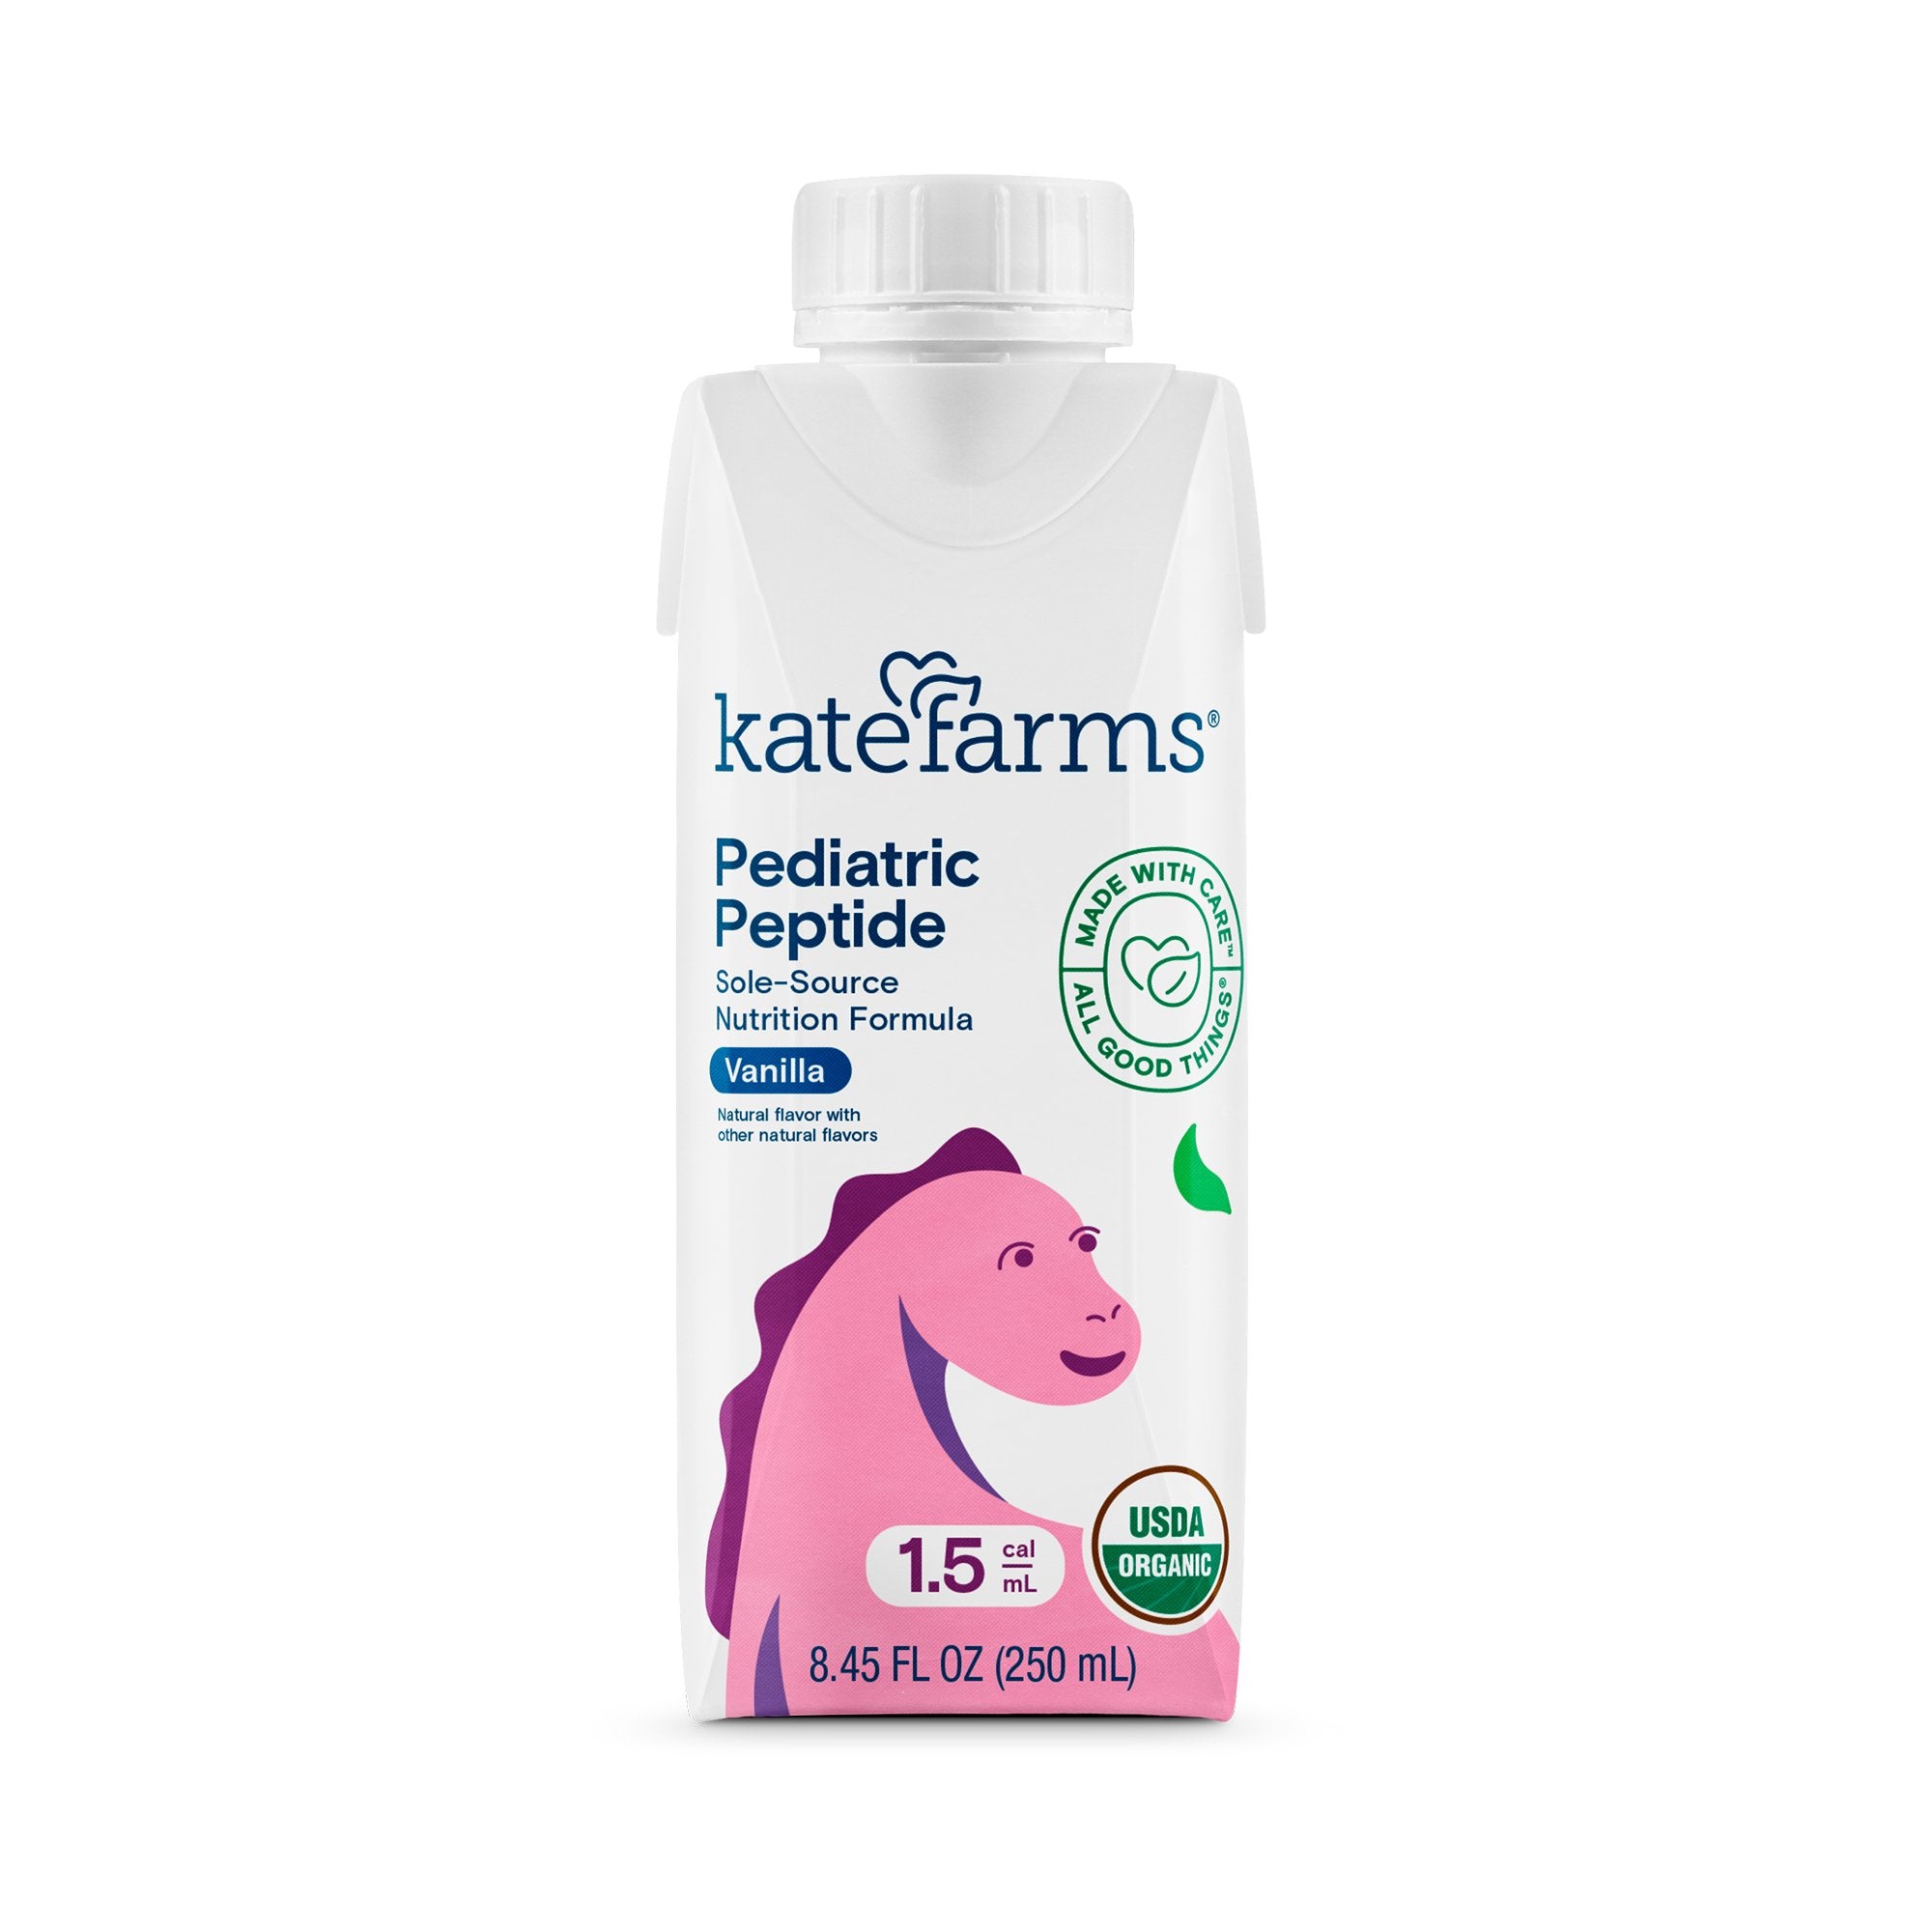 Kate Farms® Pediatric Peptide 1.5 Sole-Source Nutrition Formula, Vanilla Flavor, 8.5-ounce carton